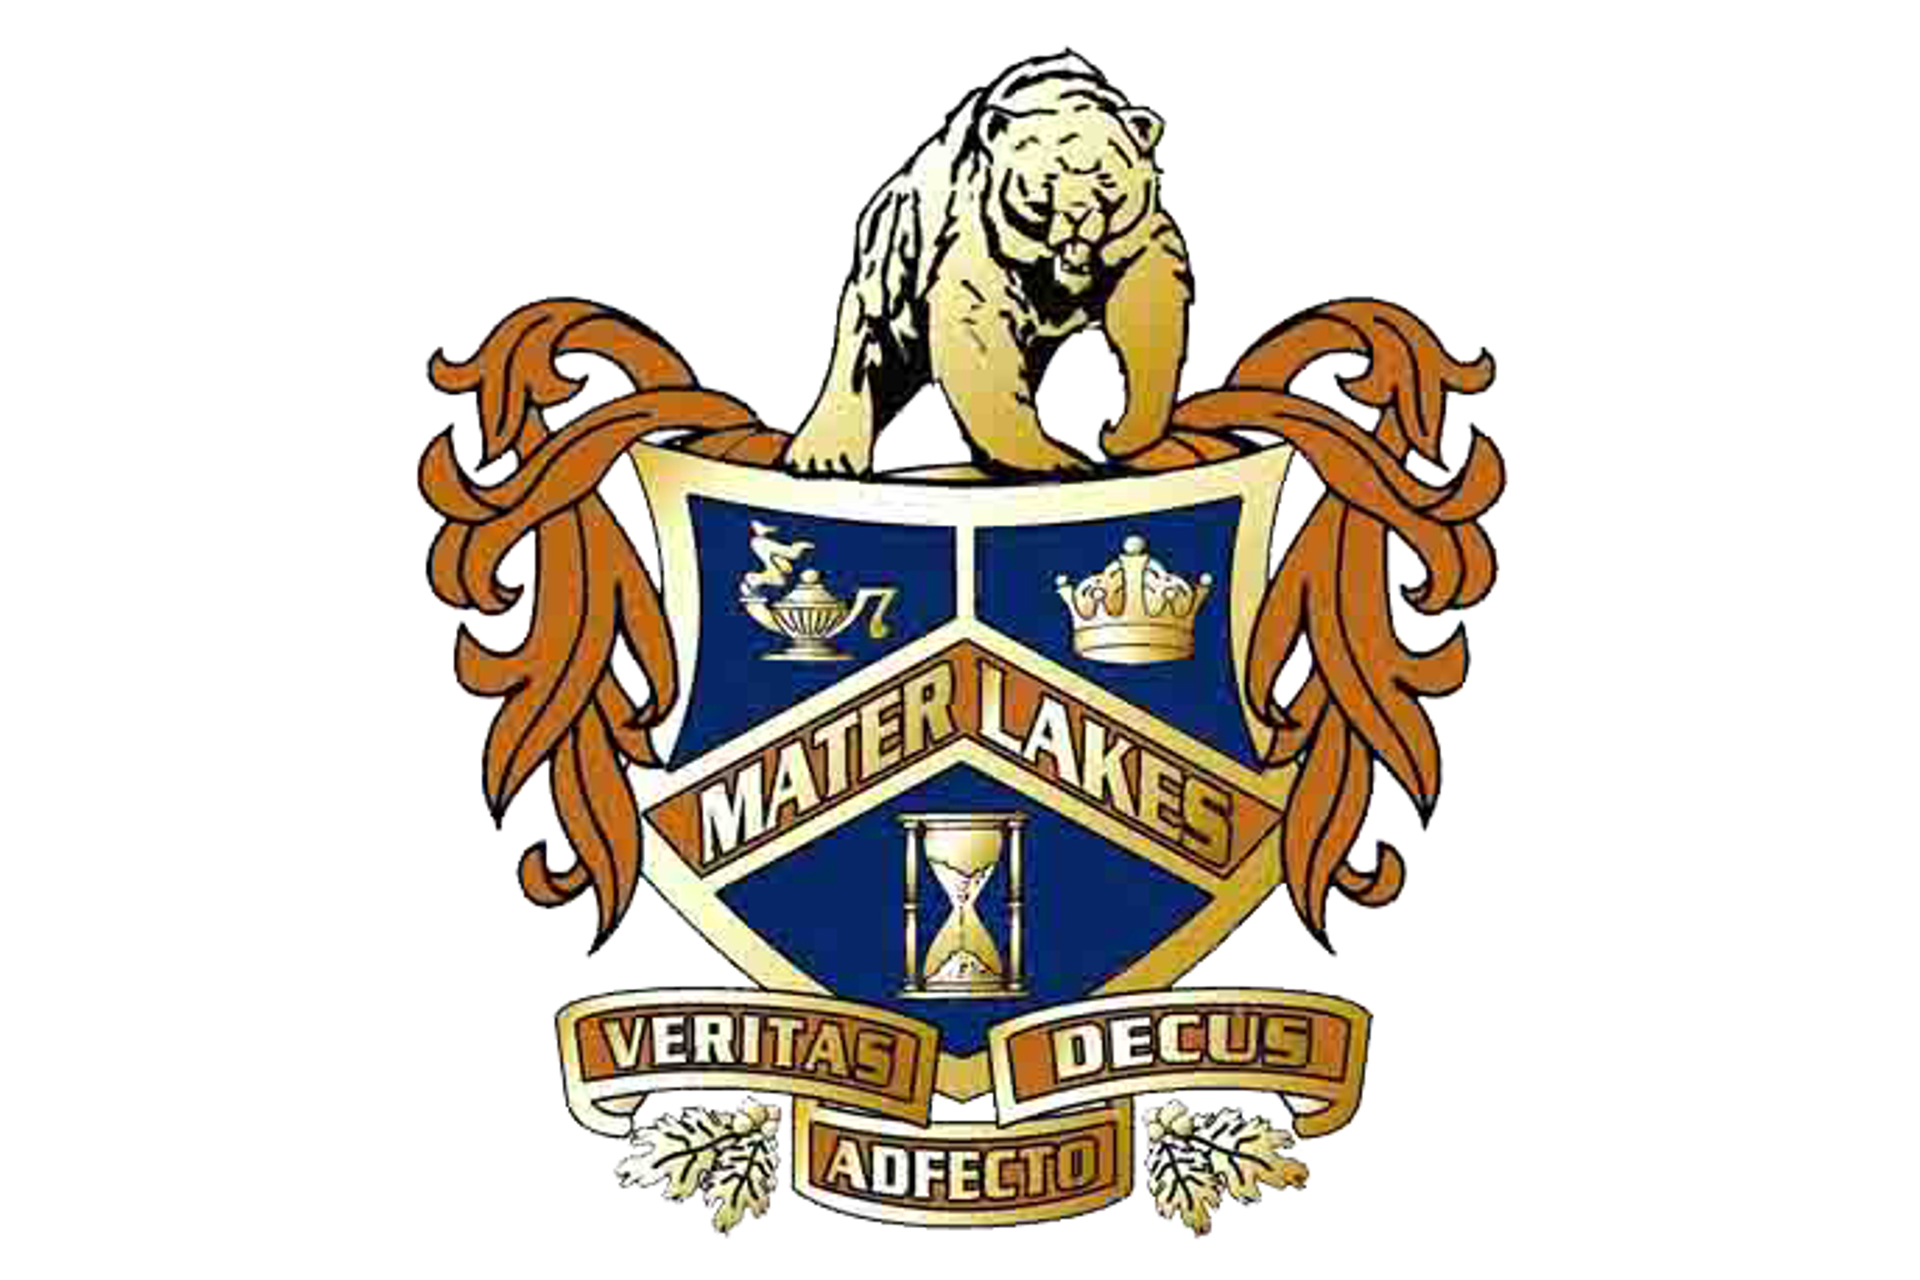 Mater Lakes Academy Class of 2019 Graduation logo